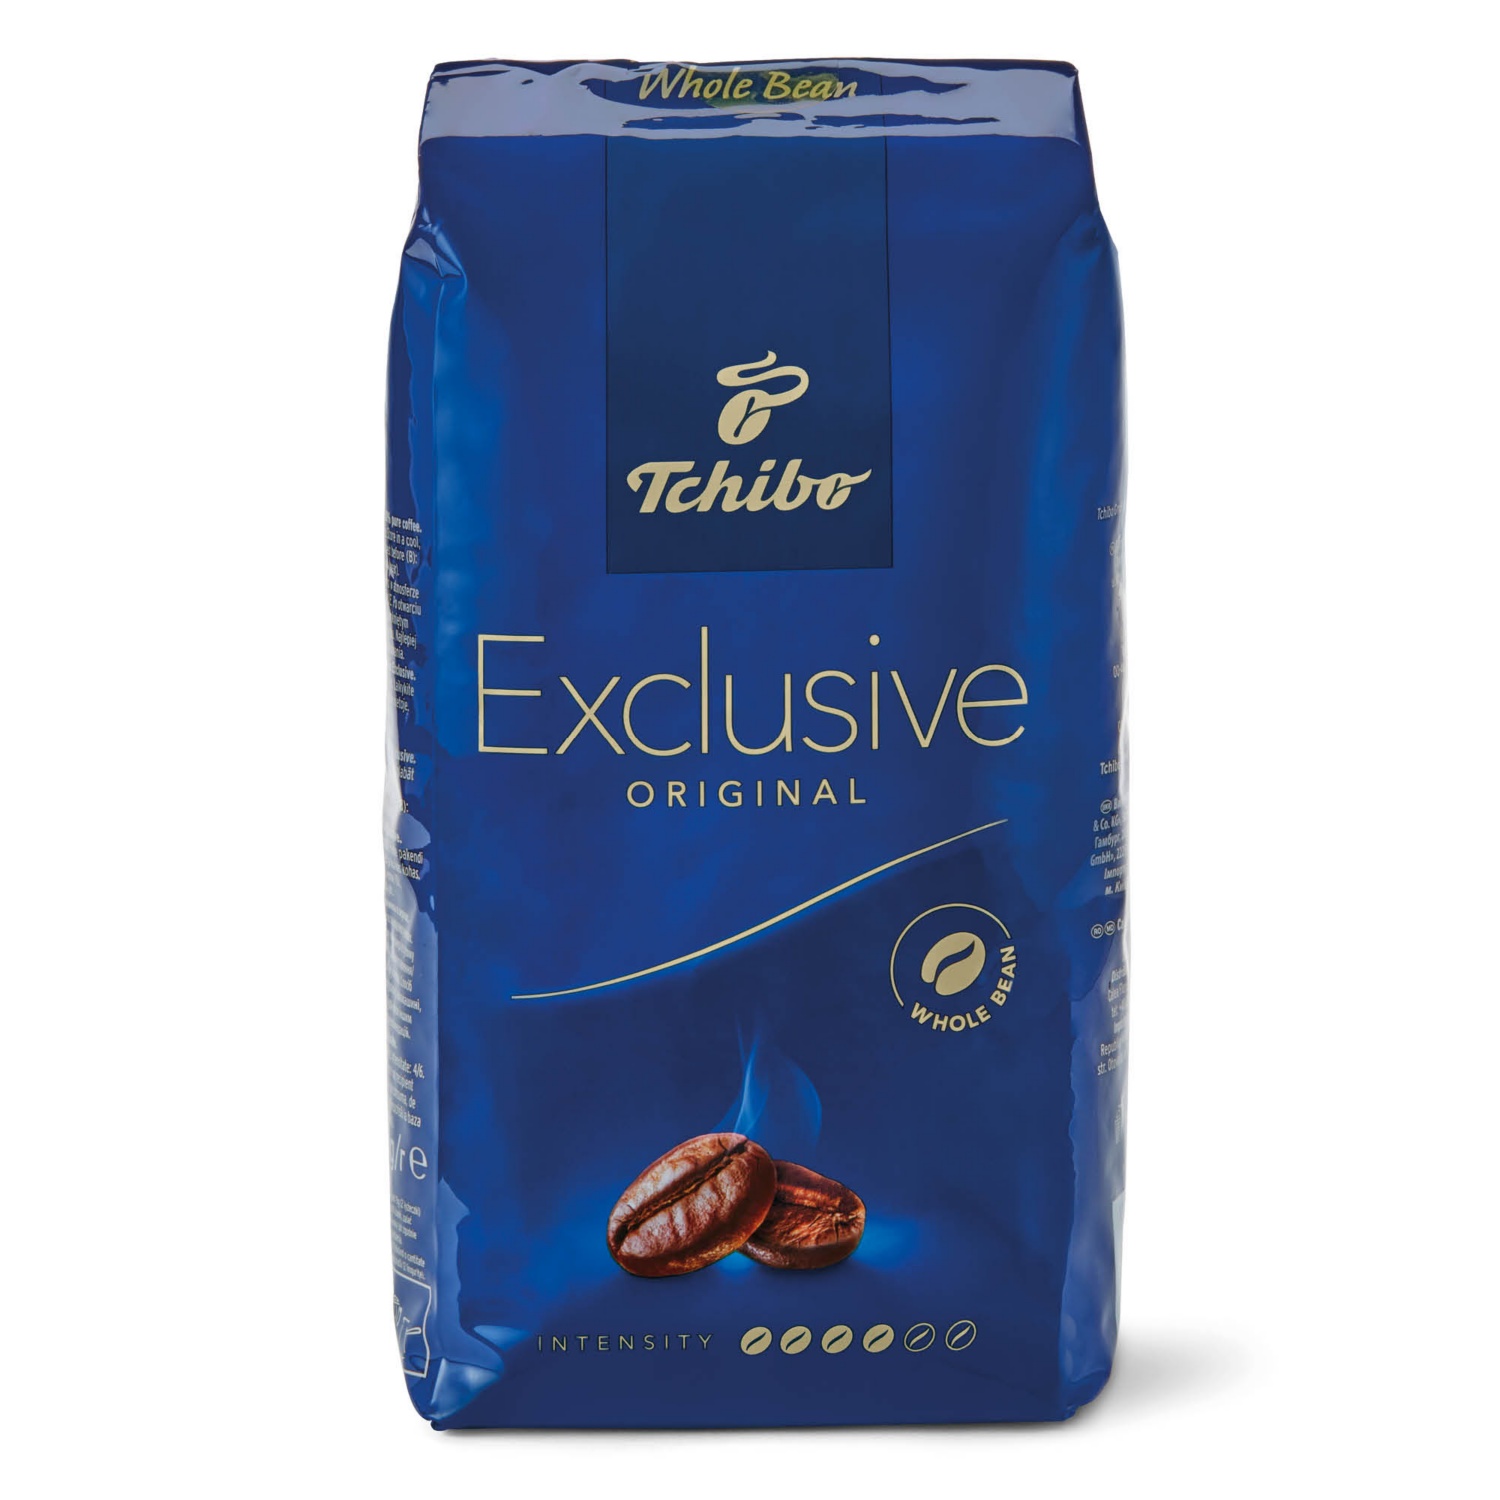 TCHIBO Exclusive szemes kávé, 1 kg, Original